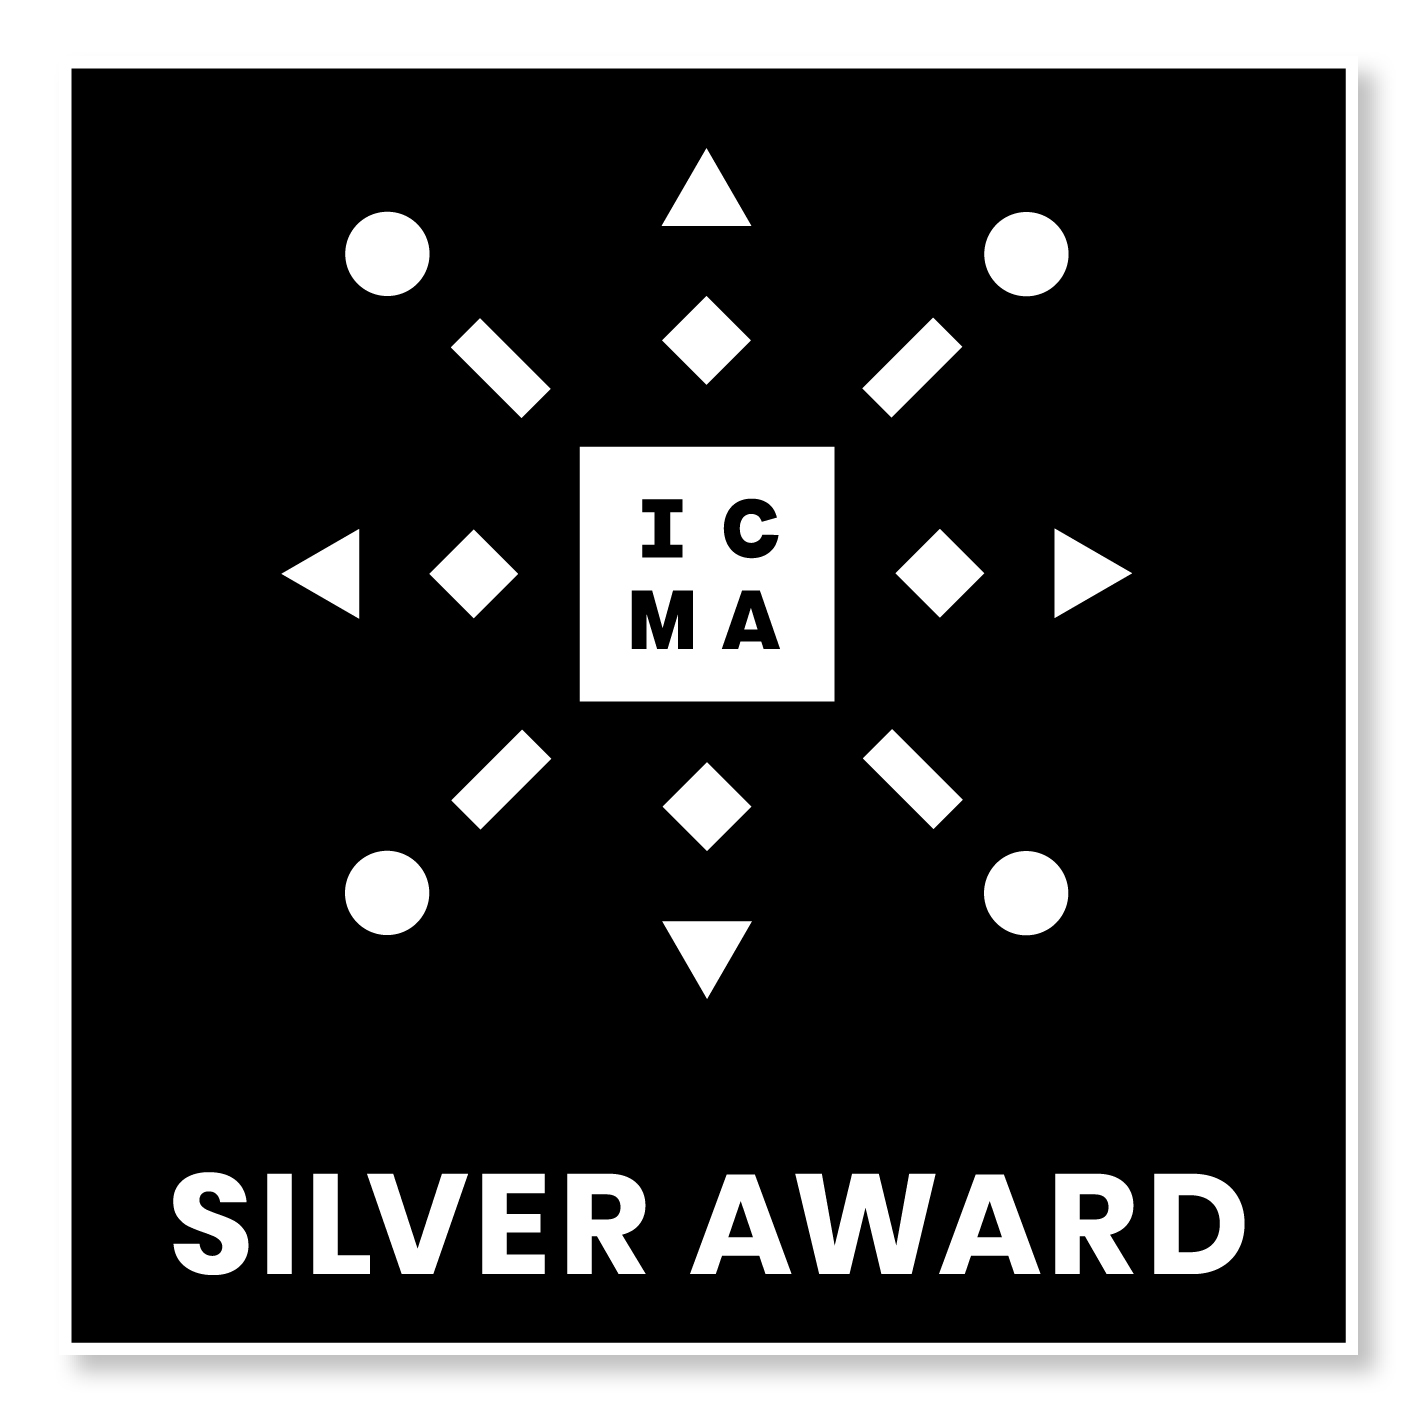 ICMA Award: general literature